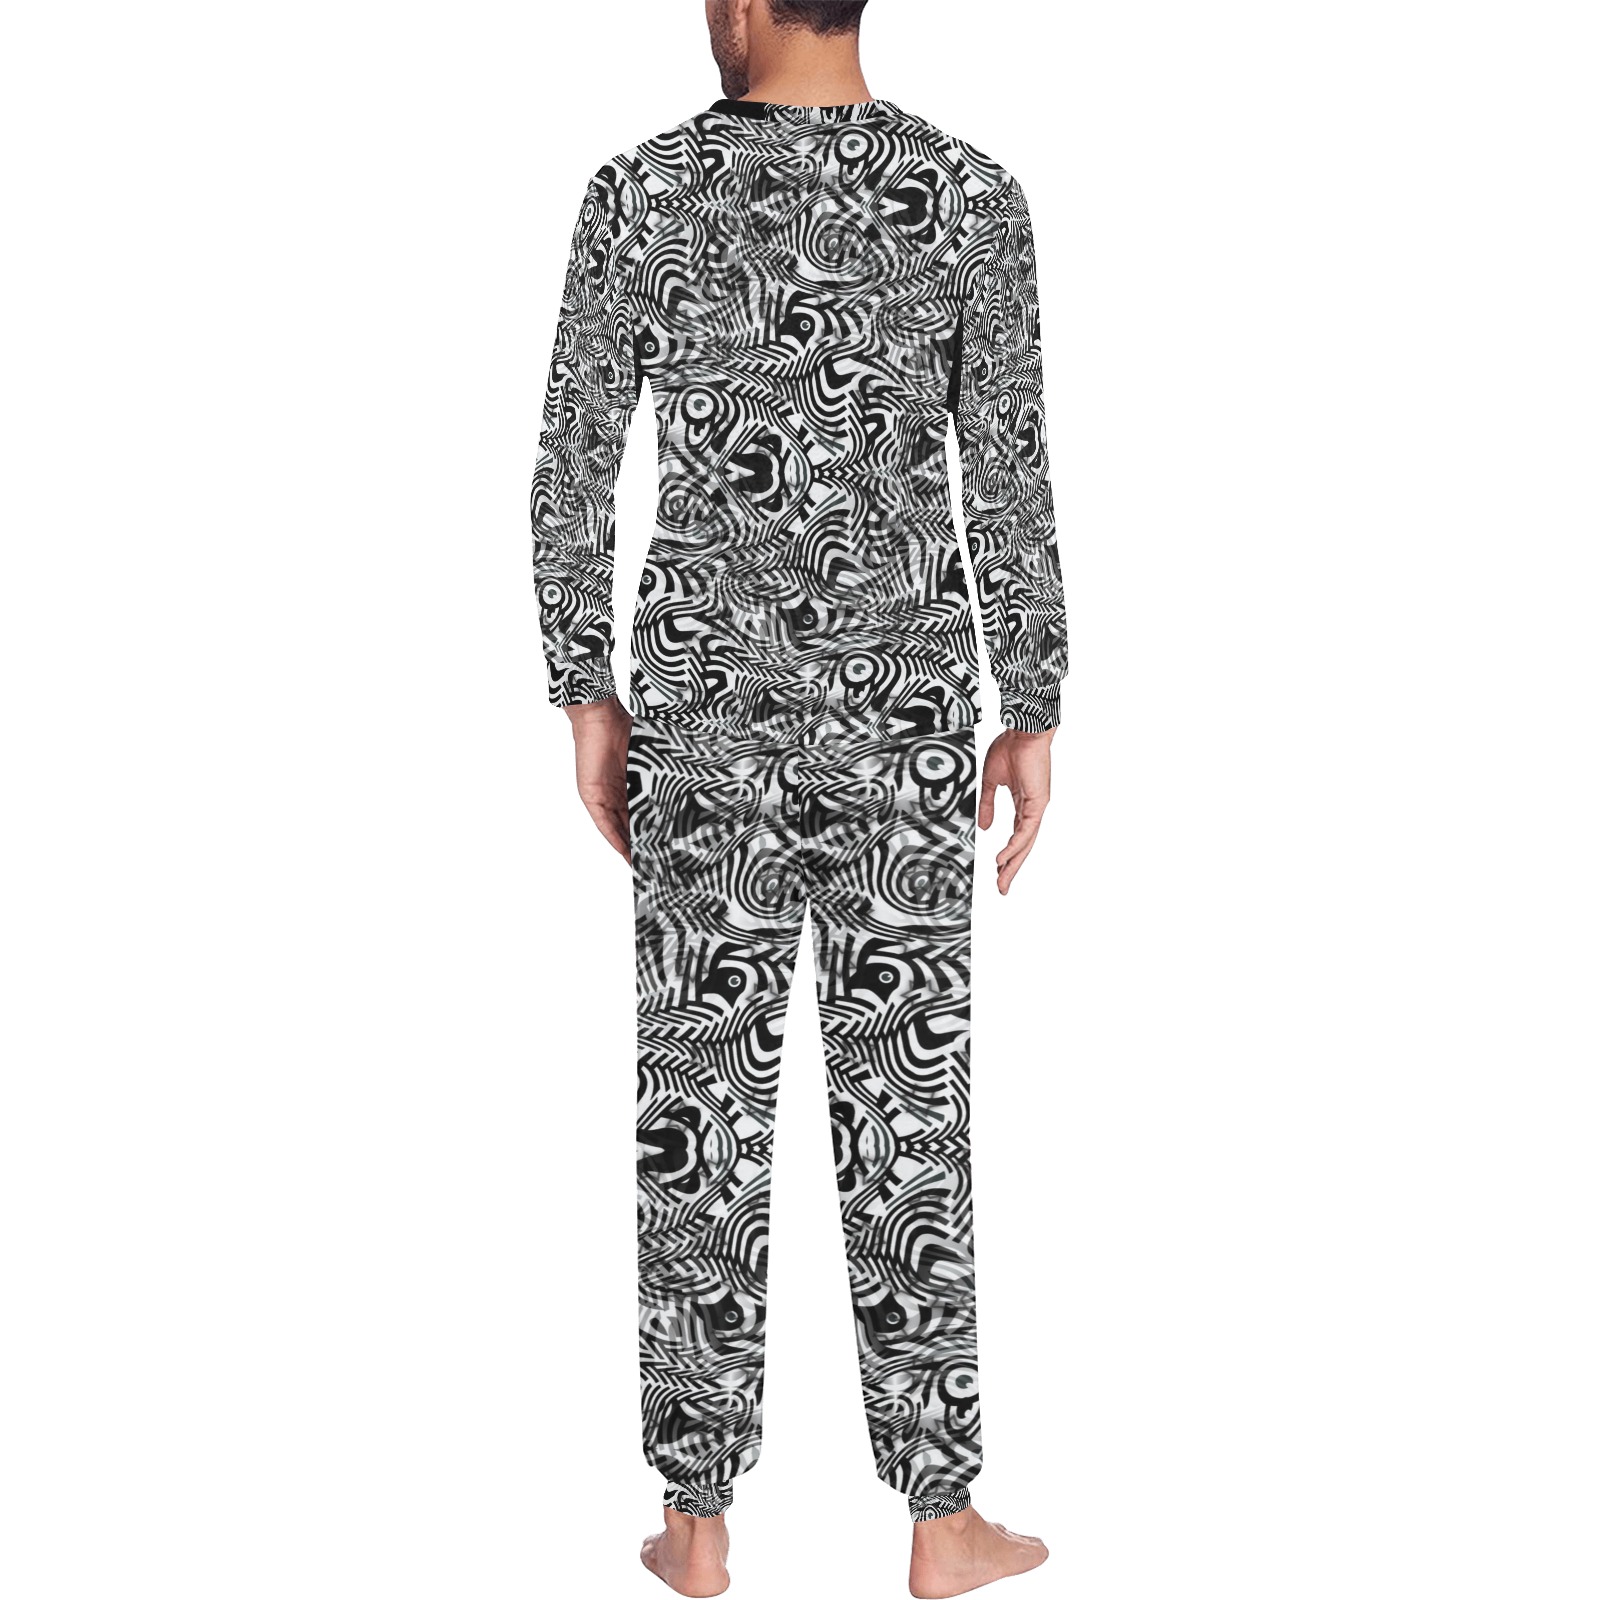 Zebra by Artdream Men's All Over Print Pajama Set with Custom Cuff